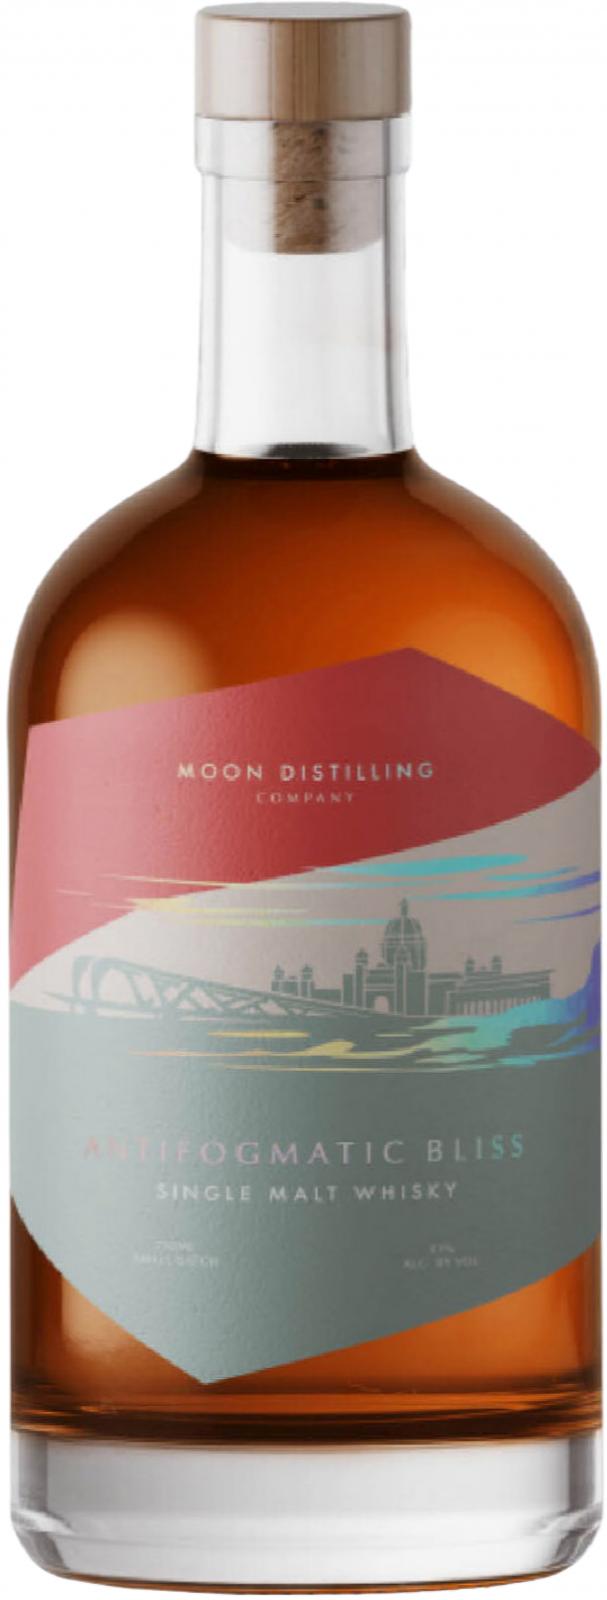 Moon Distilling Antifogmatic Bliss 2021 Release Single Malt Whisky